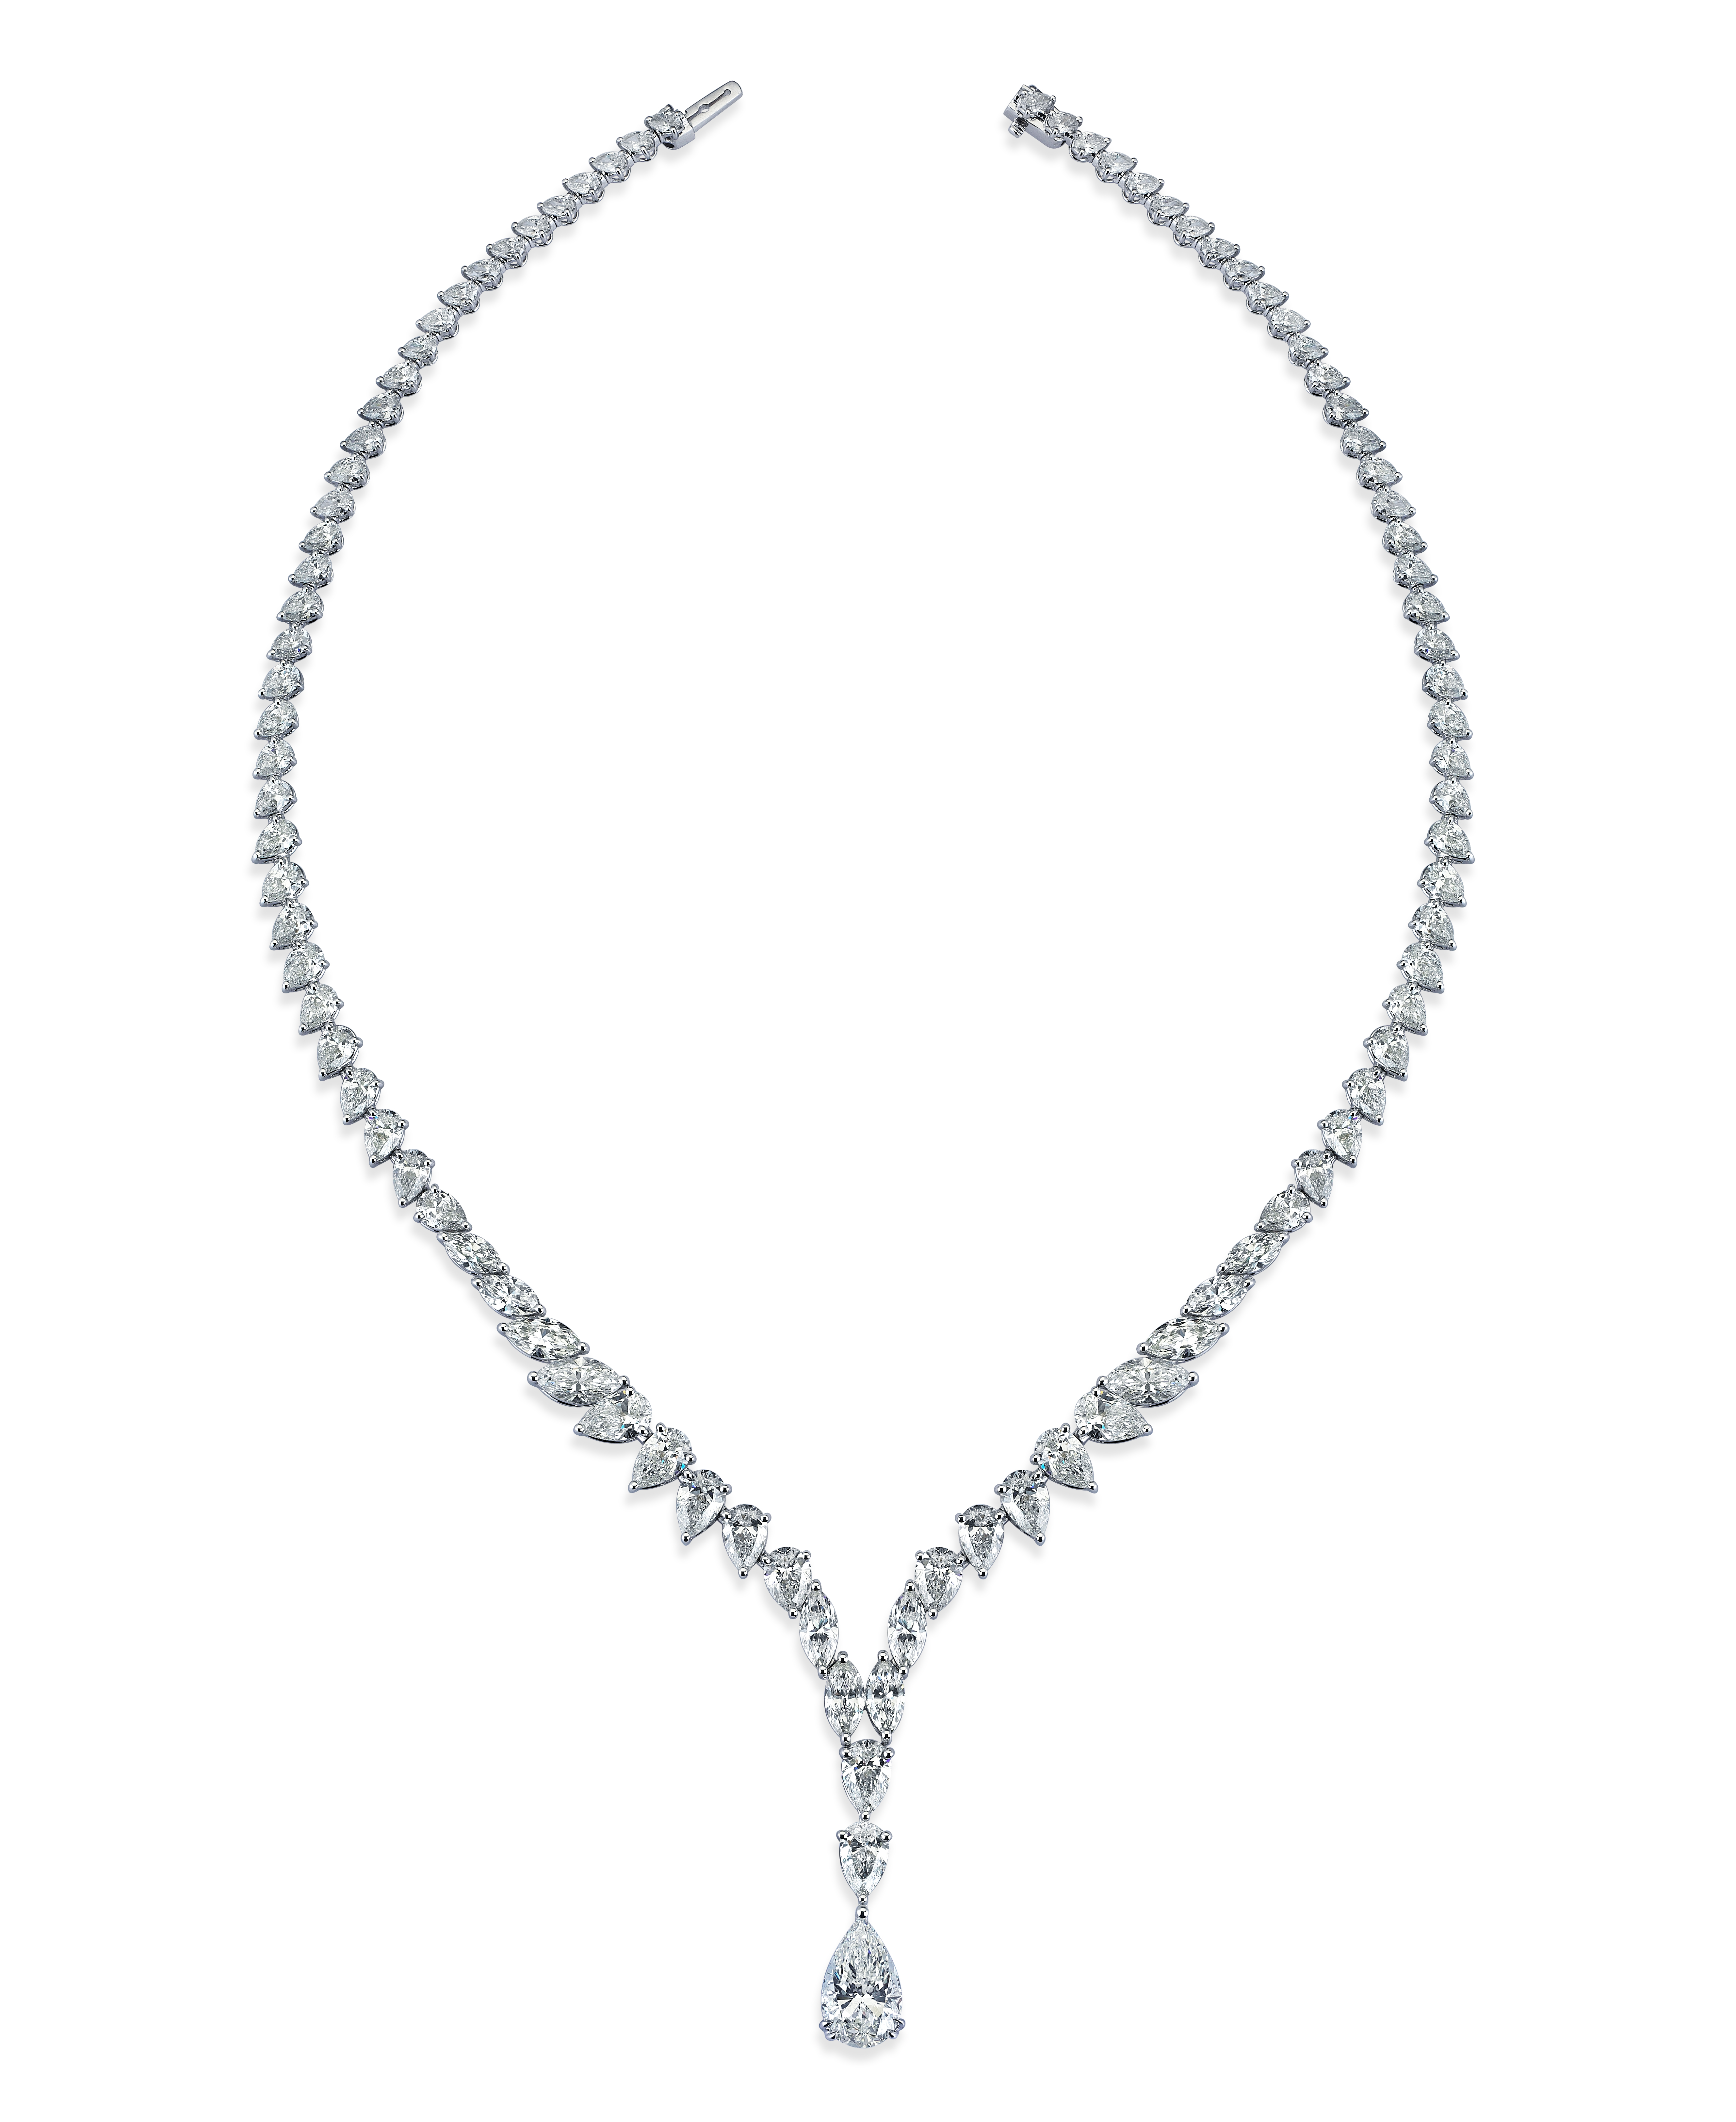 31.51 ct Diamond Necklace